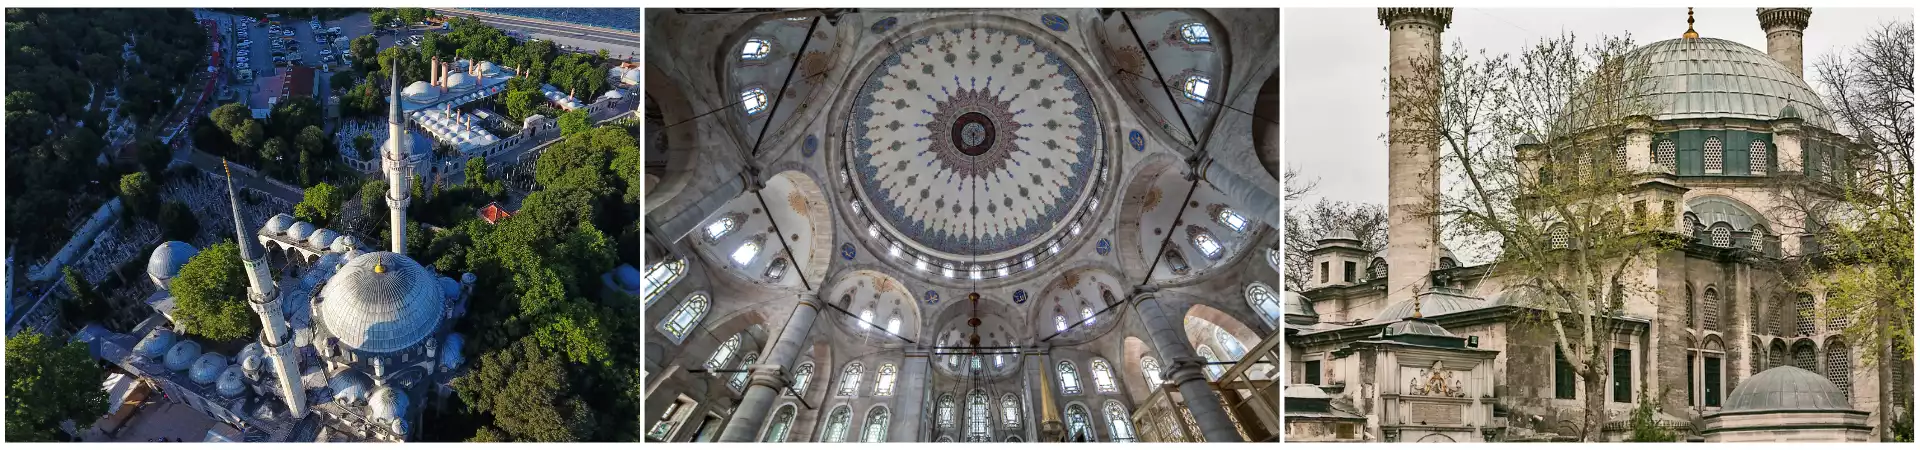 Visite de la mosquée Eyüp Sultan